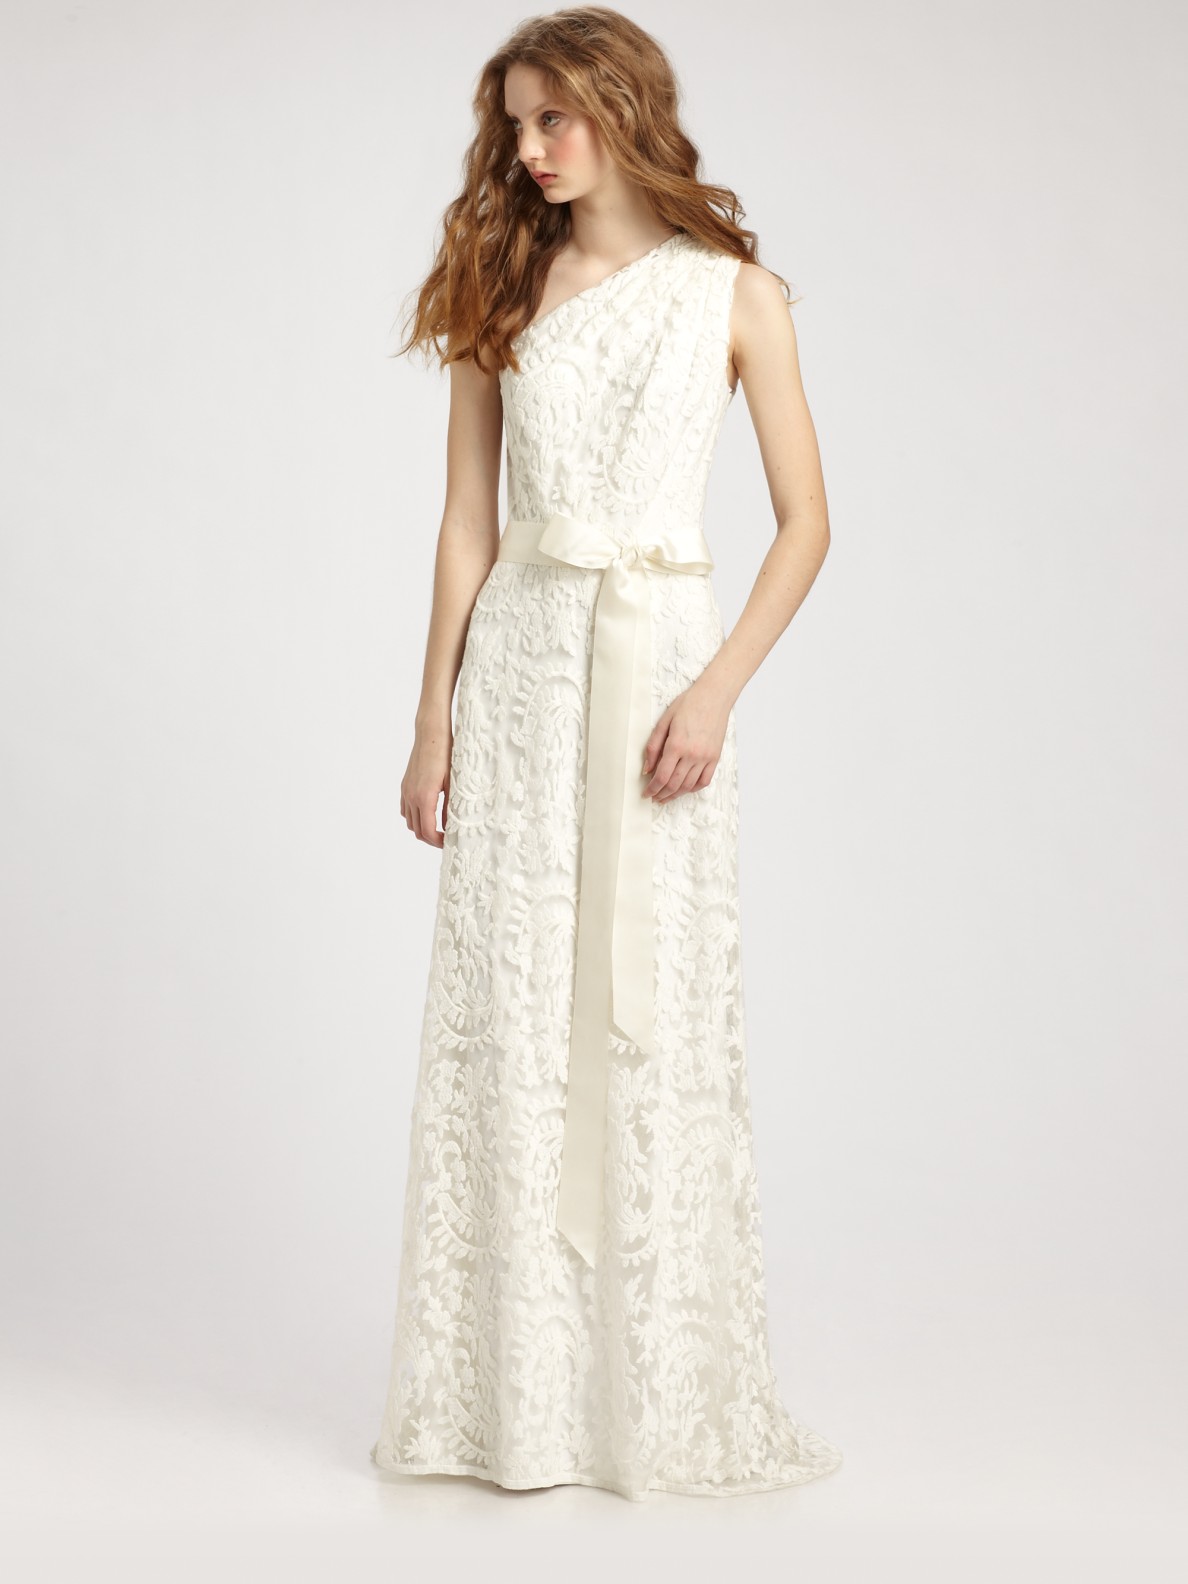 Tadashi shoji One-shoulder Lace Gown in White | Lyst